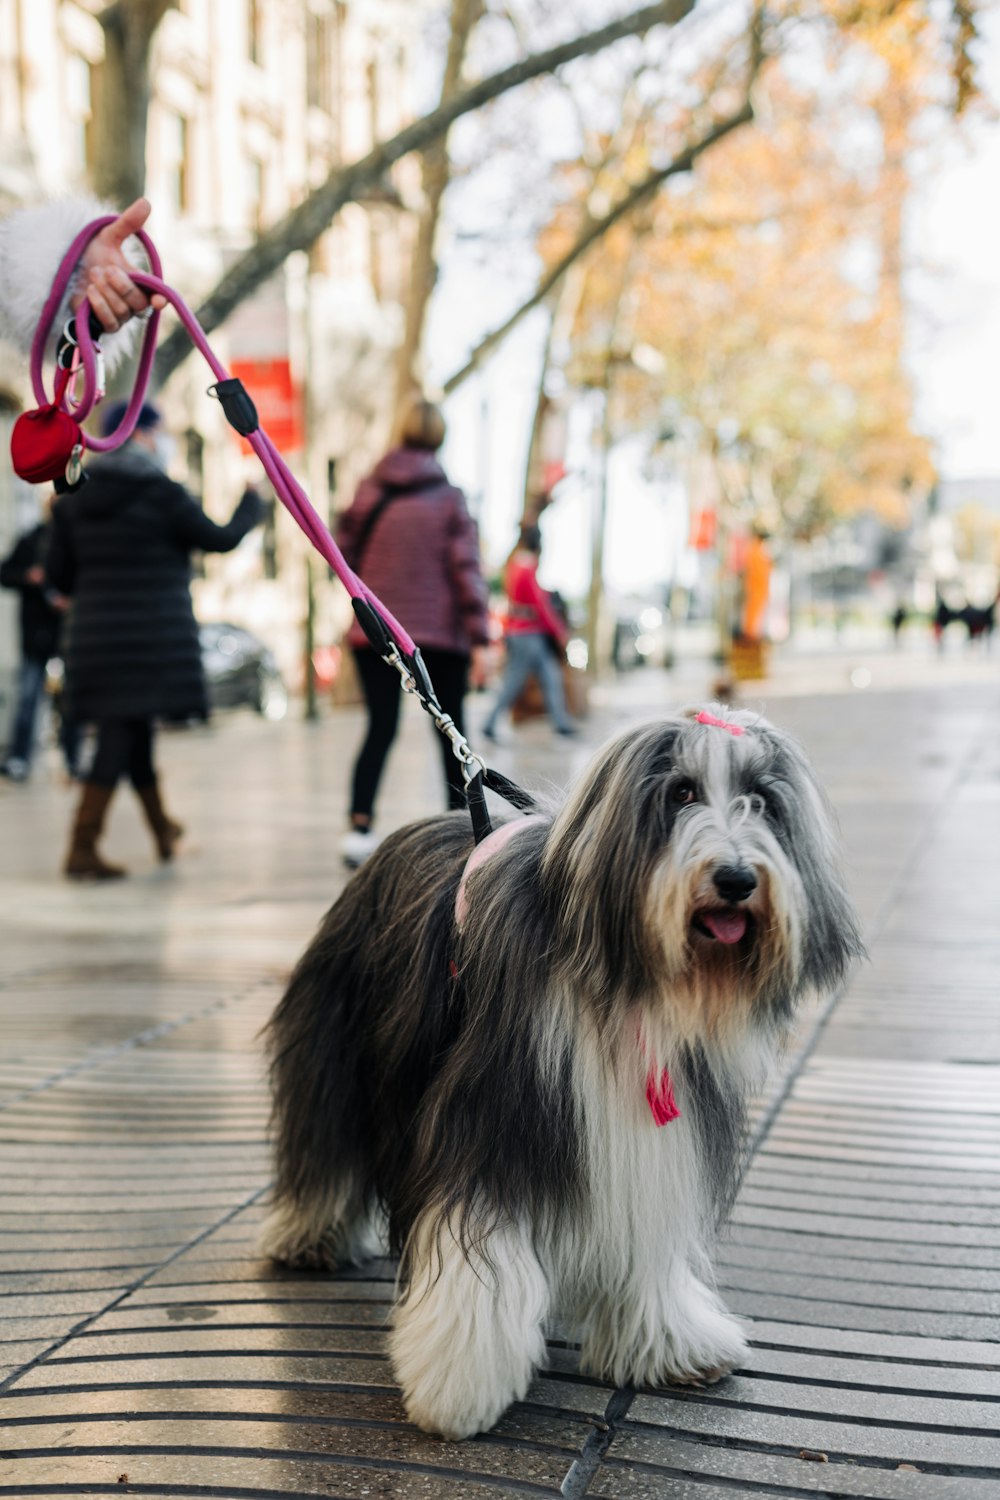 a dog on a leash on a city street